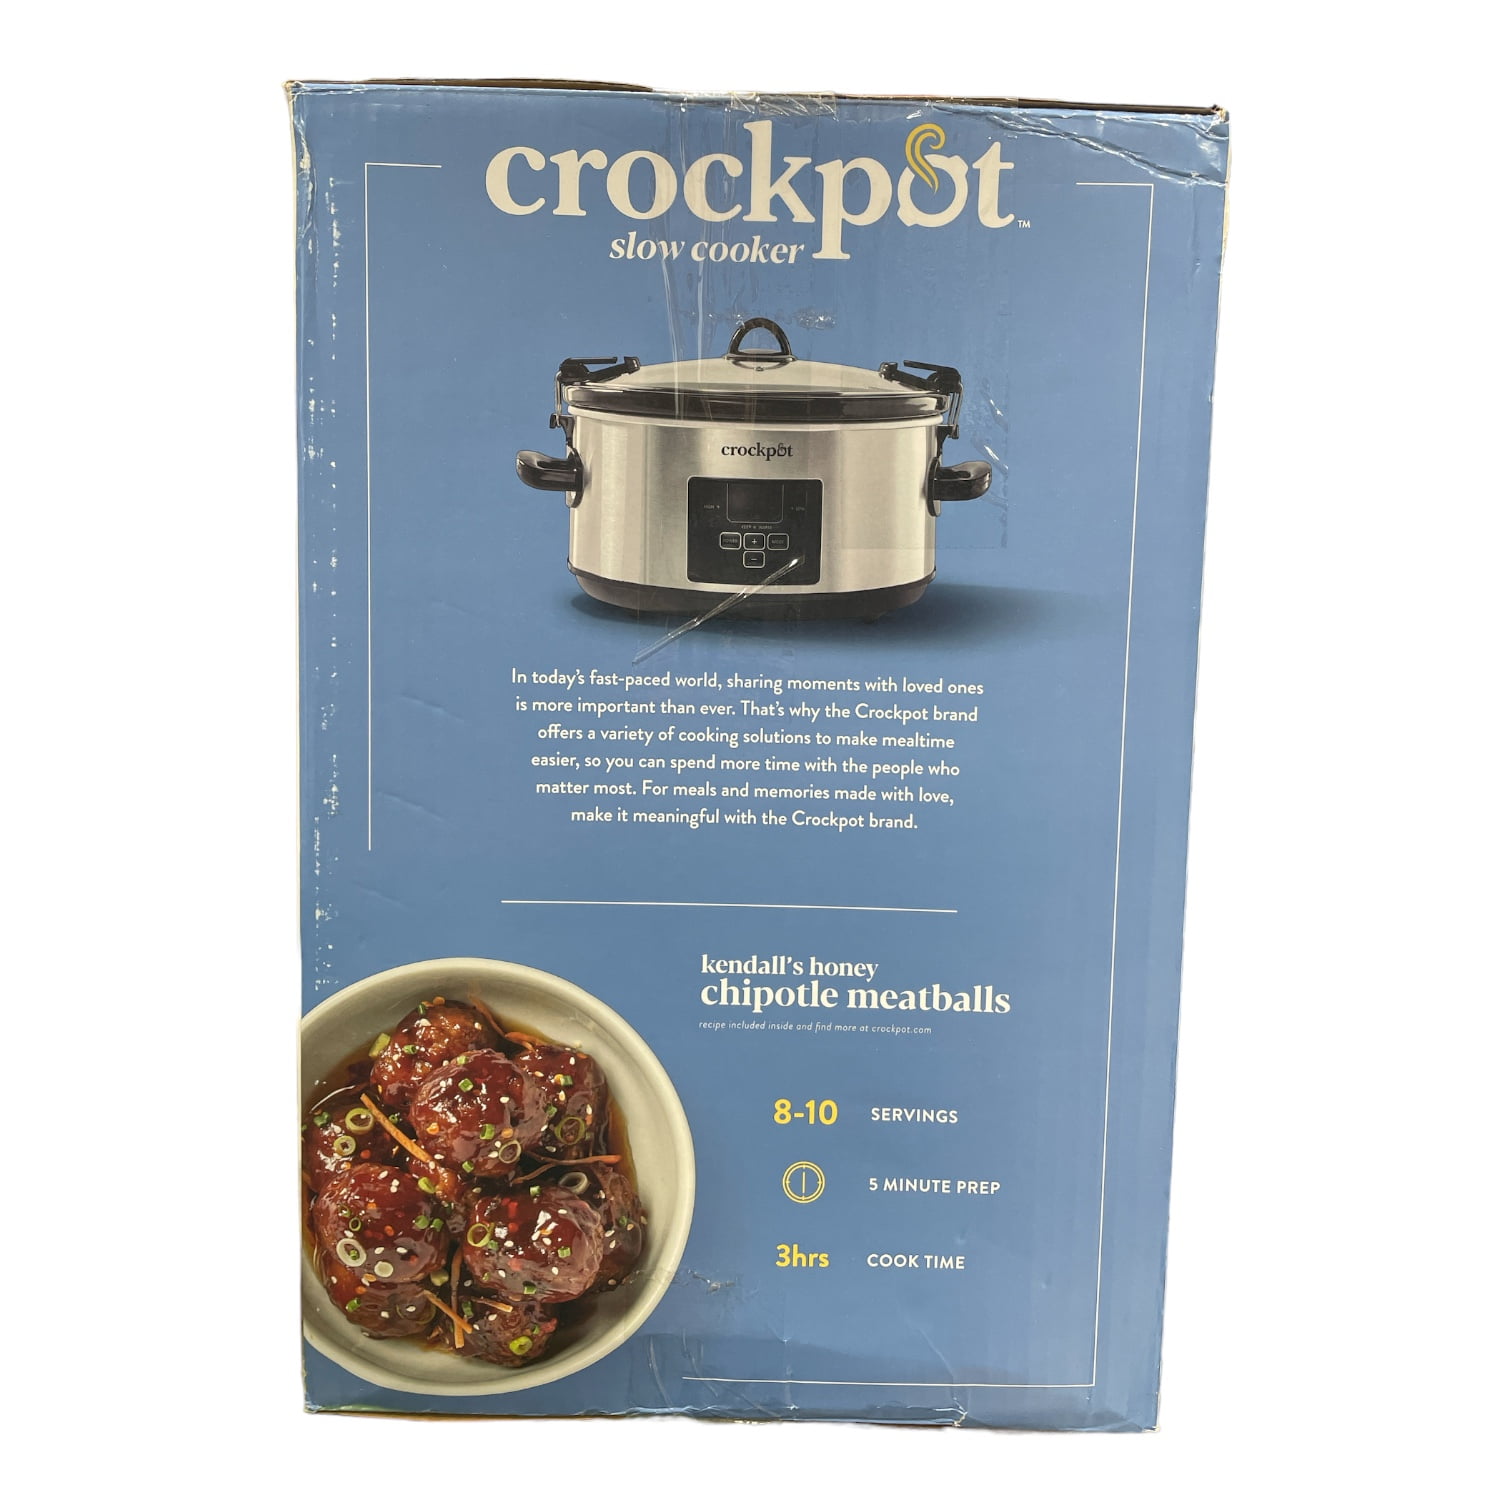 Crock-Pot 7 Quart Programmable Cook & Carry Extra Large Slow